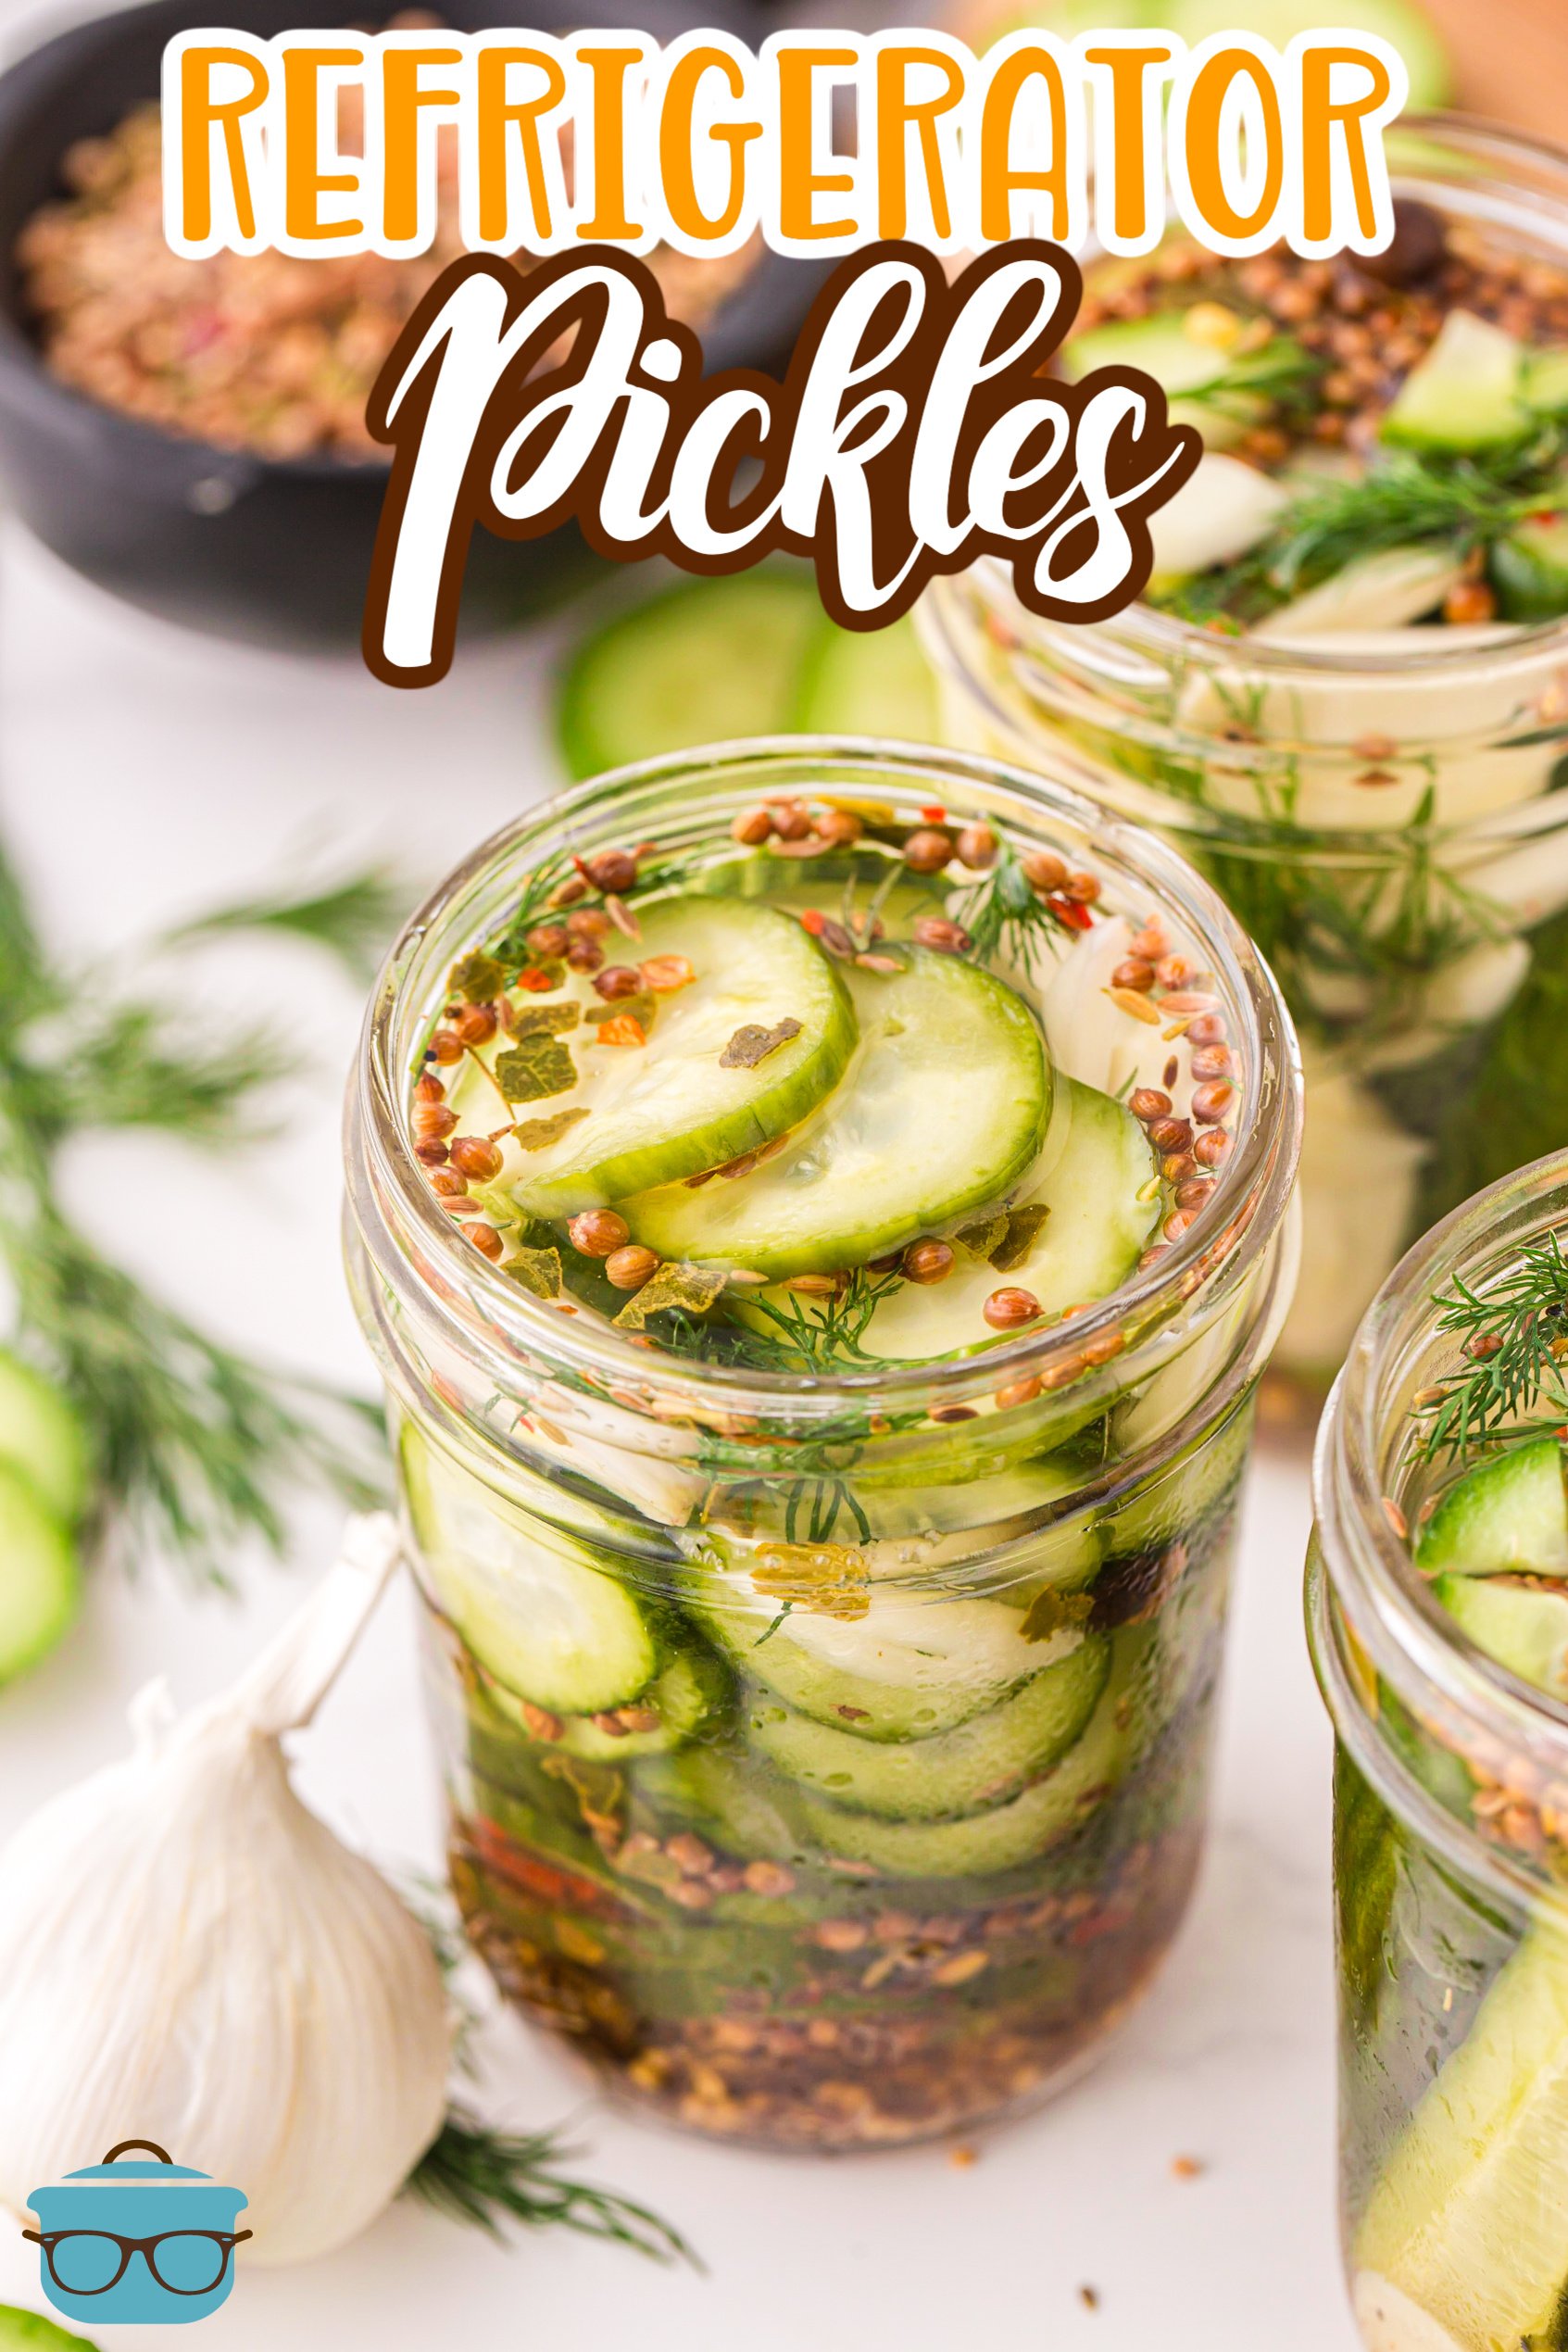 A jar of homemade Refrigerator Pickles.